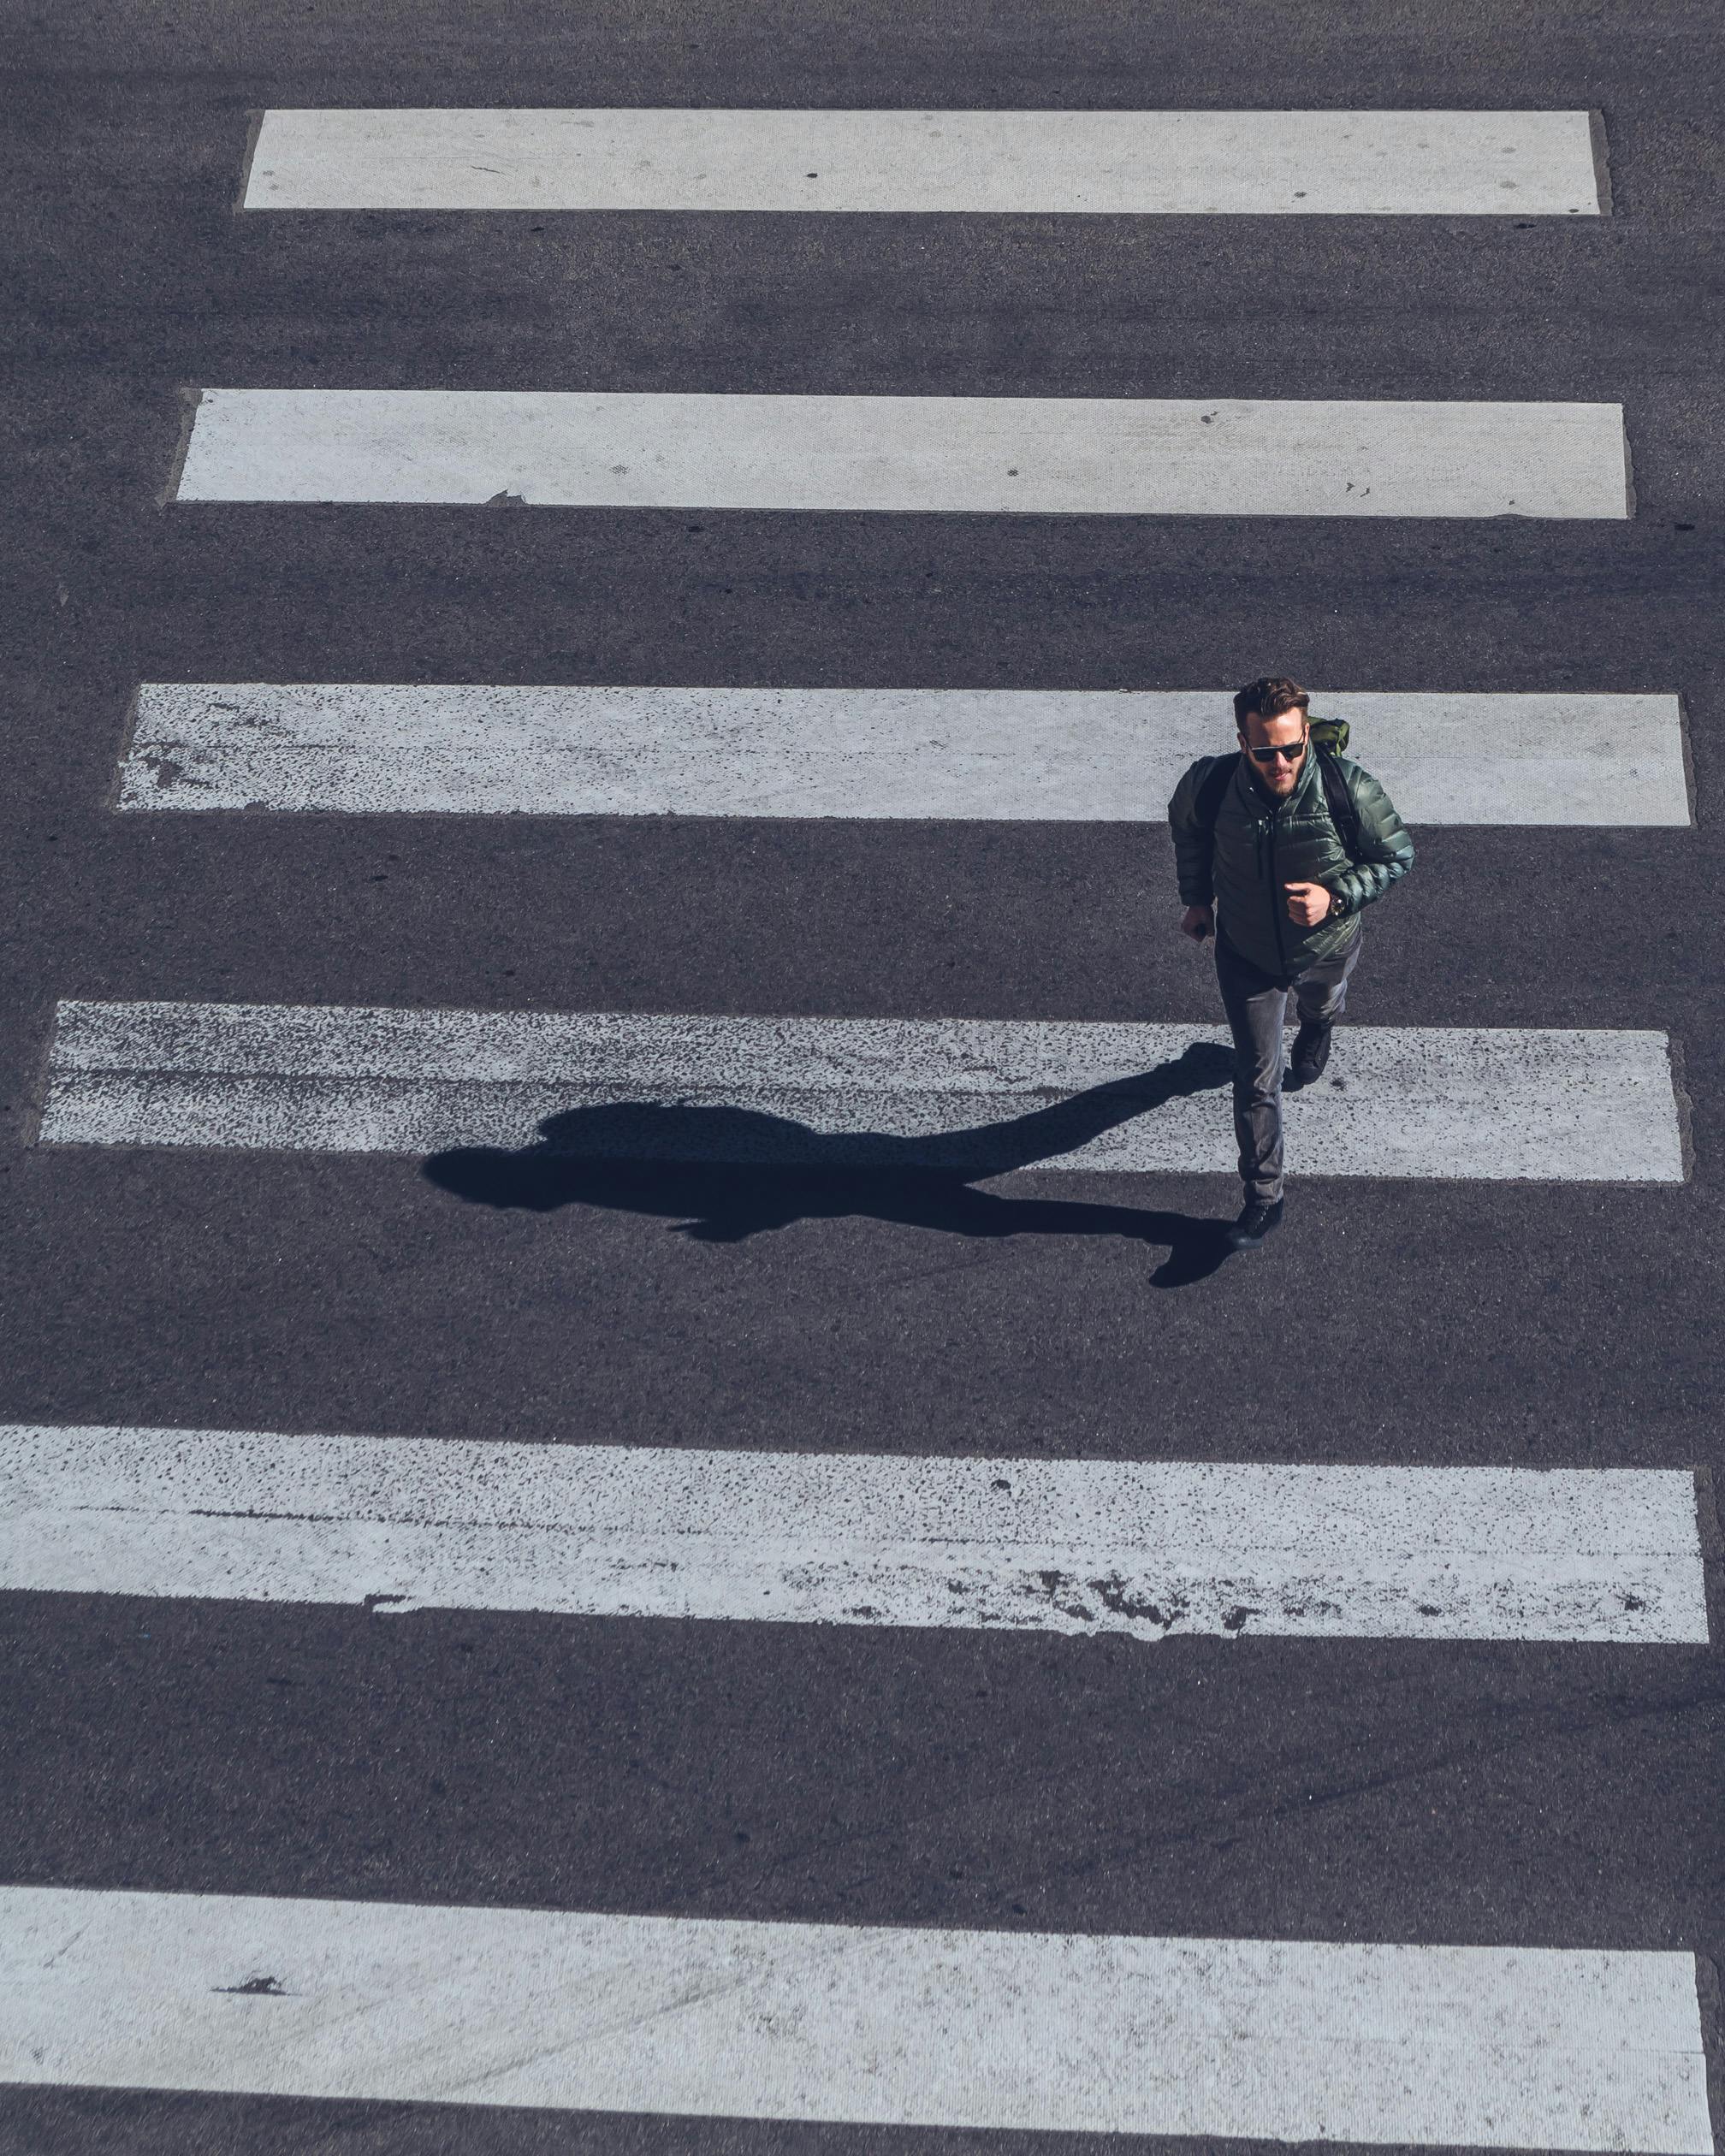 Man Crossing on Pedestrian Lane